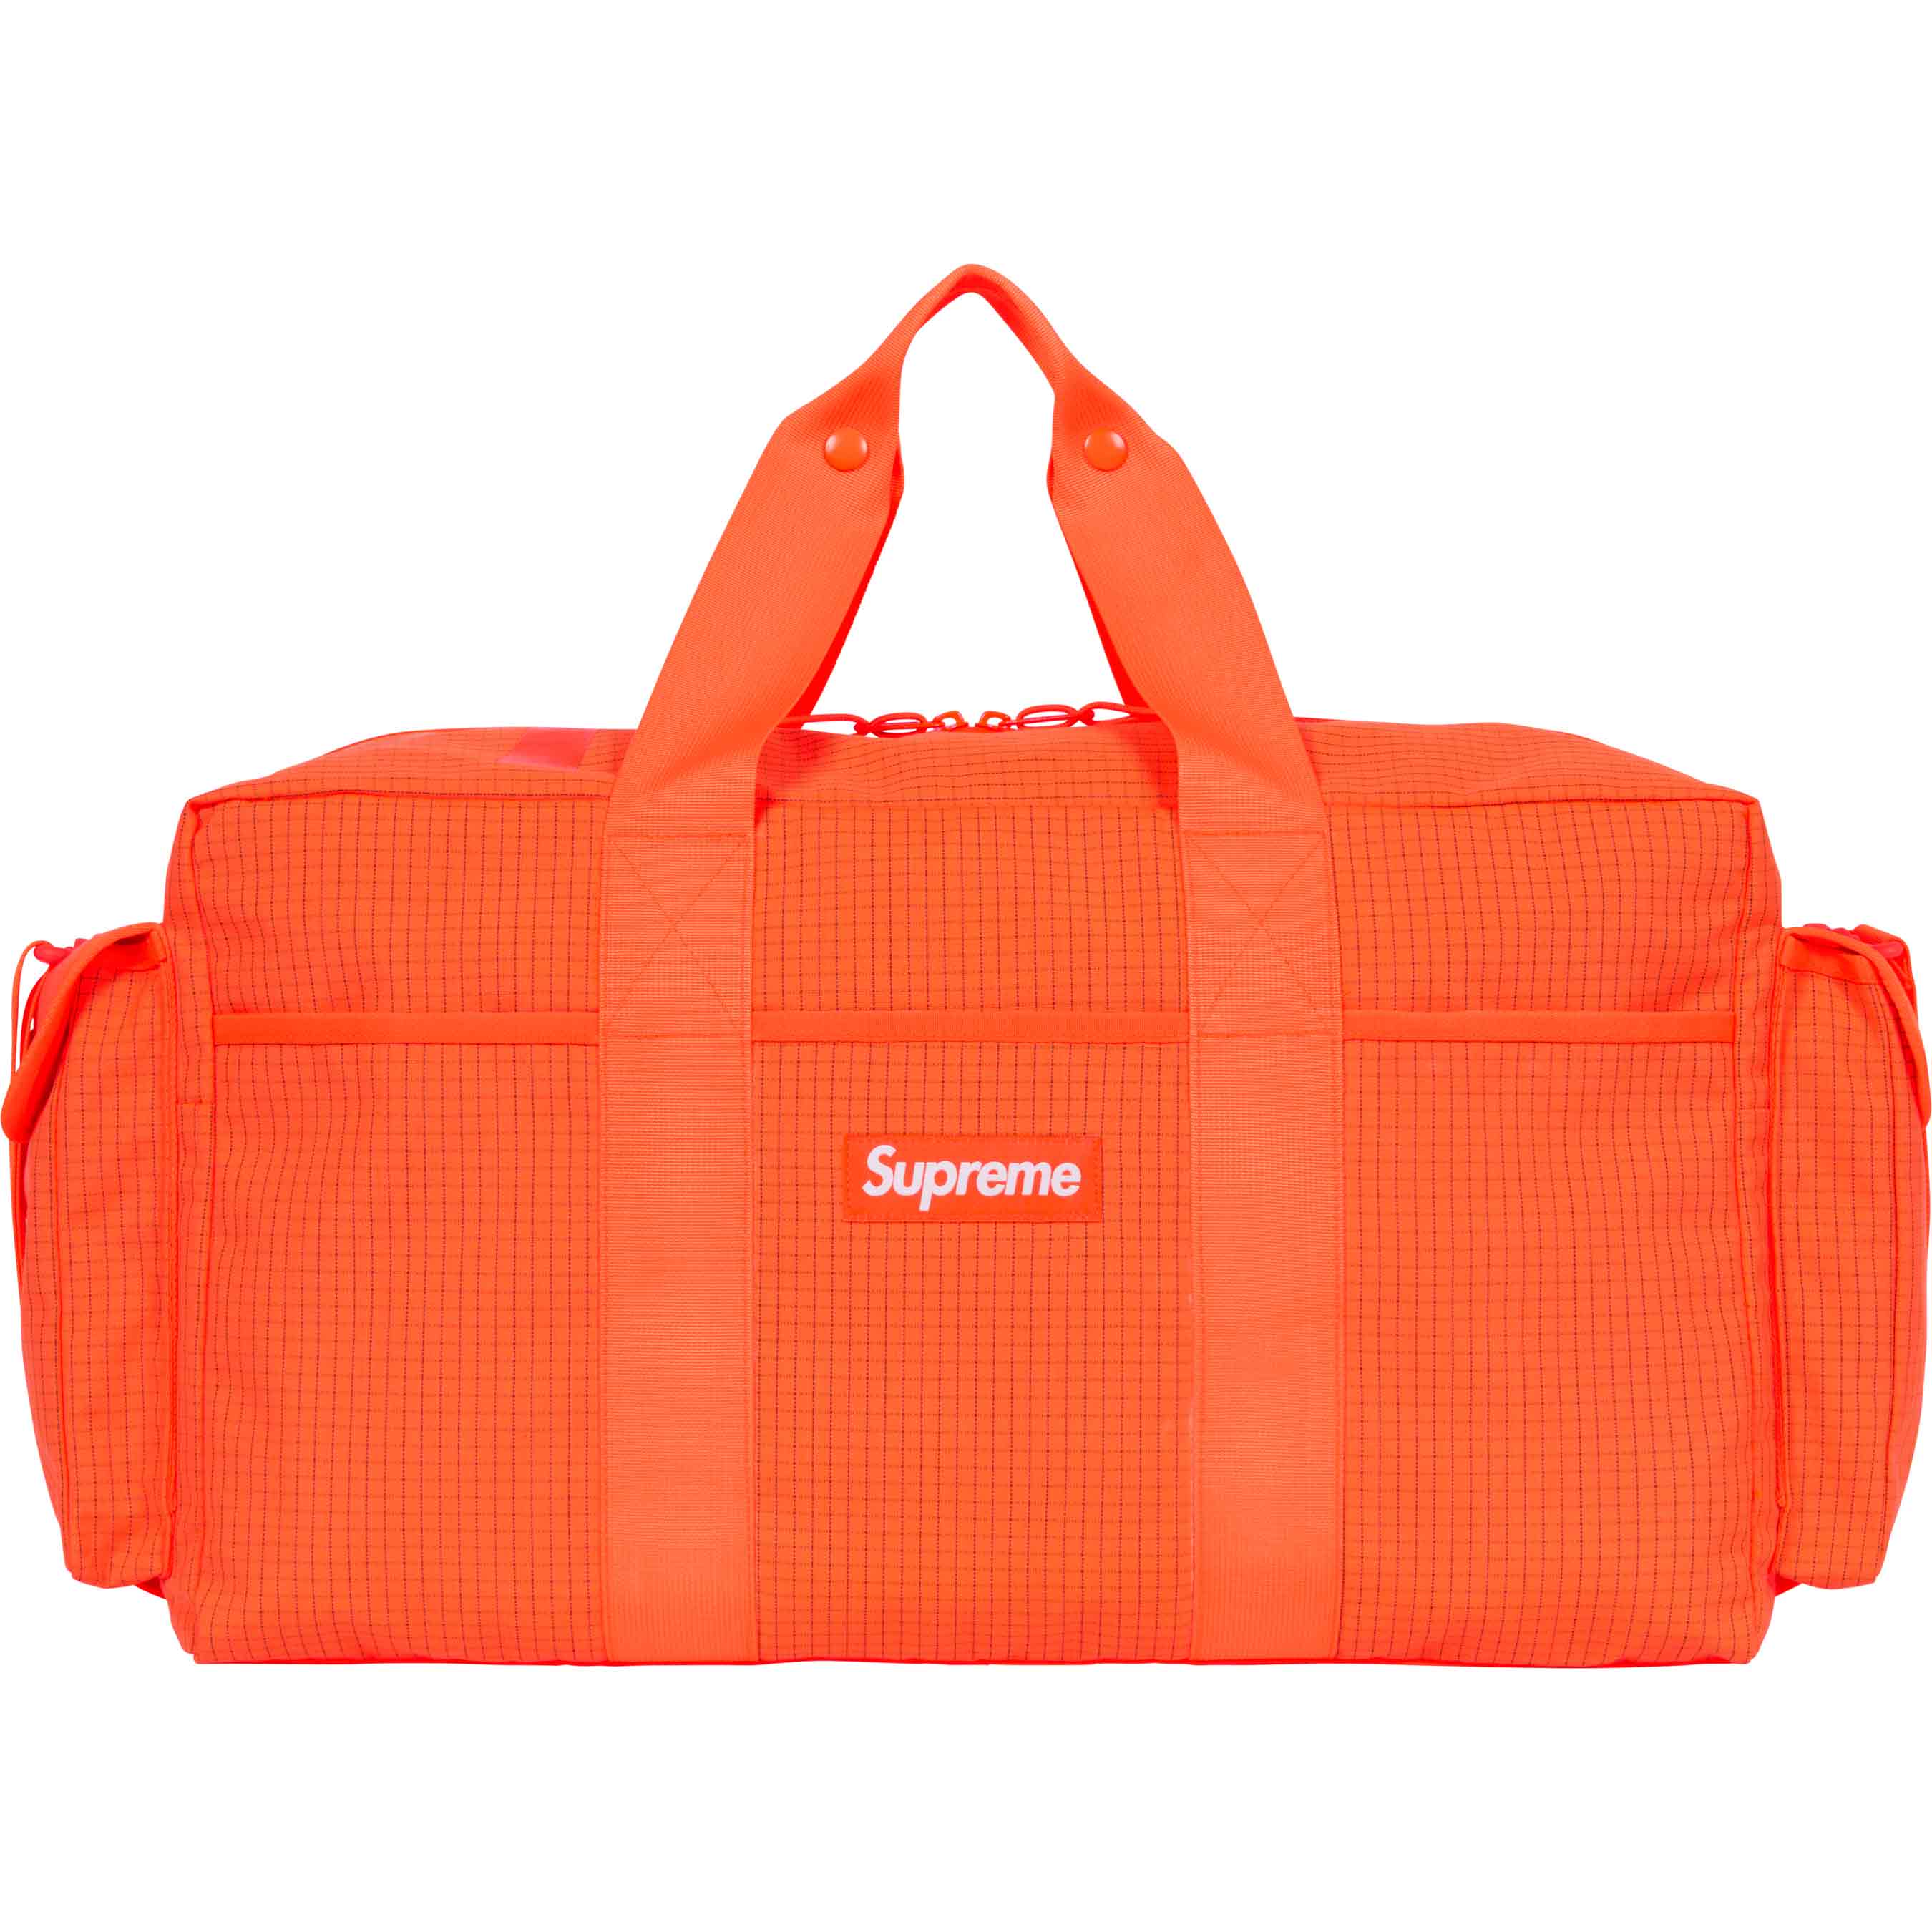 Duffle Bag - Shop - Supreme